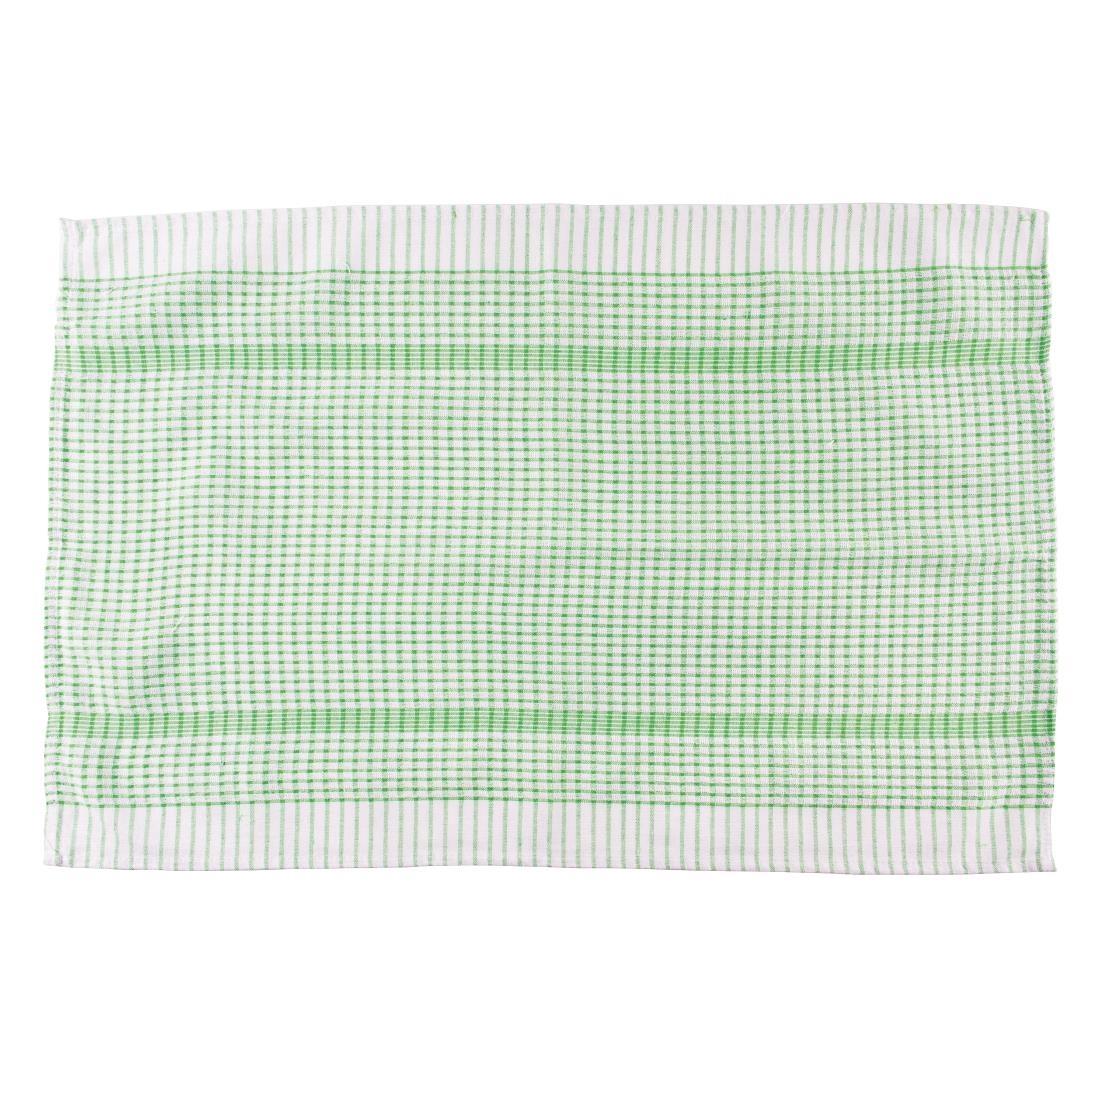 Vogue Wonderdry Tea Towels Green (Pack of 10) - E700  - 2